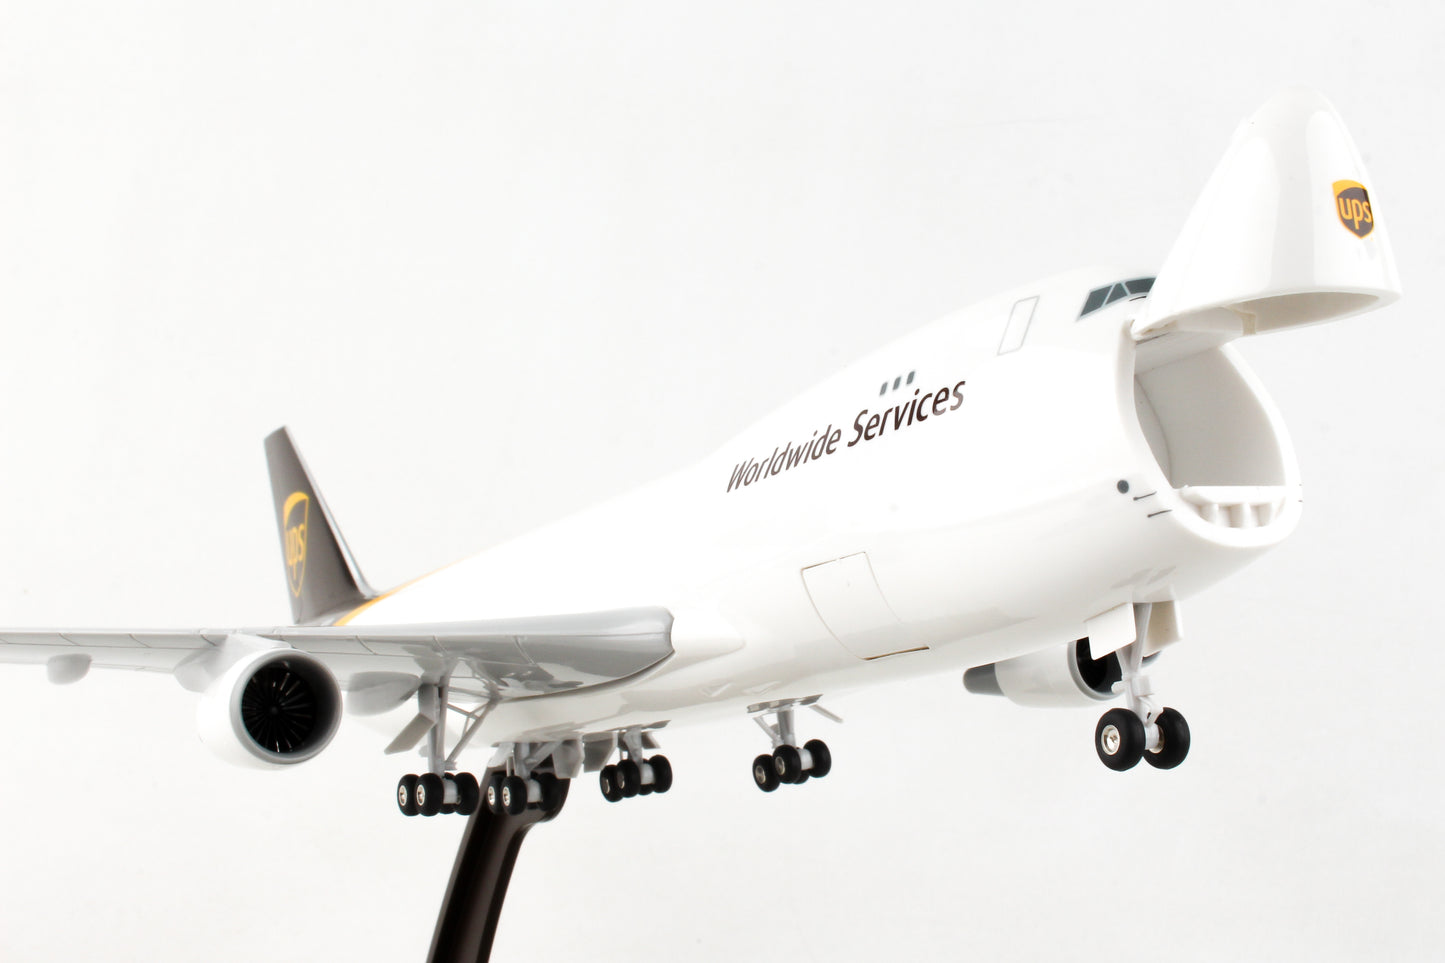 SKR1113  SKYMARKS UPS 747-400F 1/200 W/GEAR & OPENING DOORS